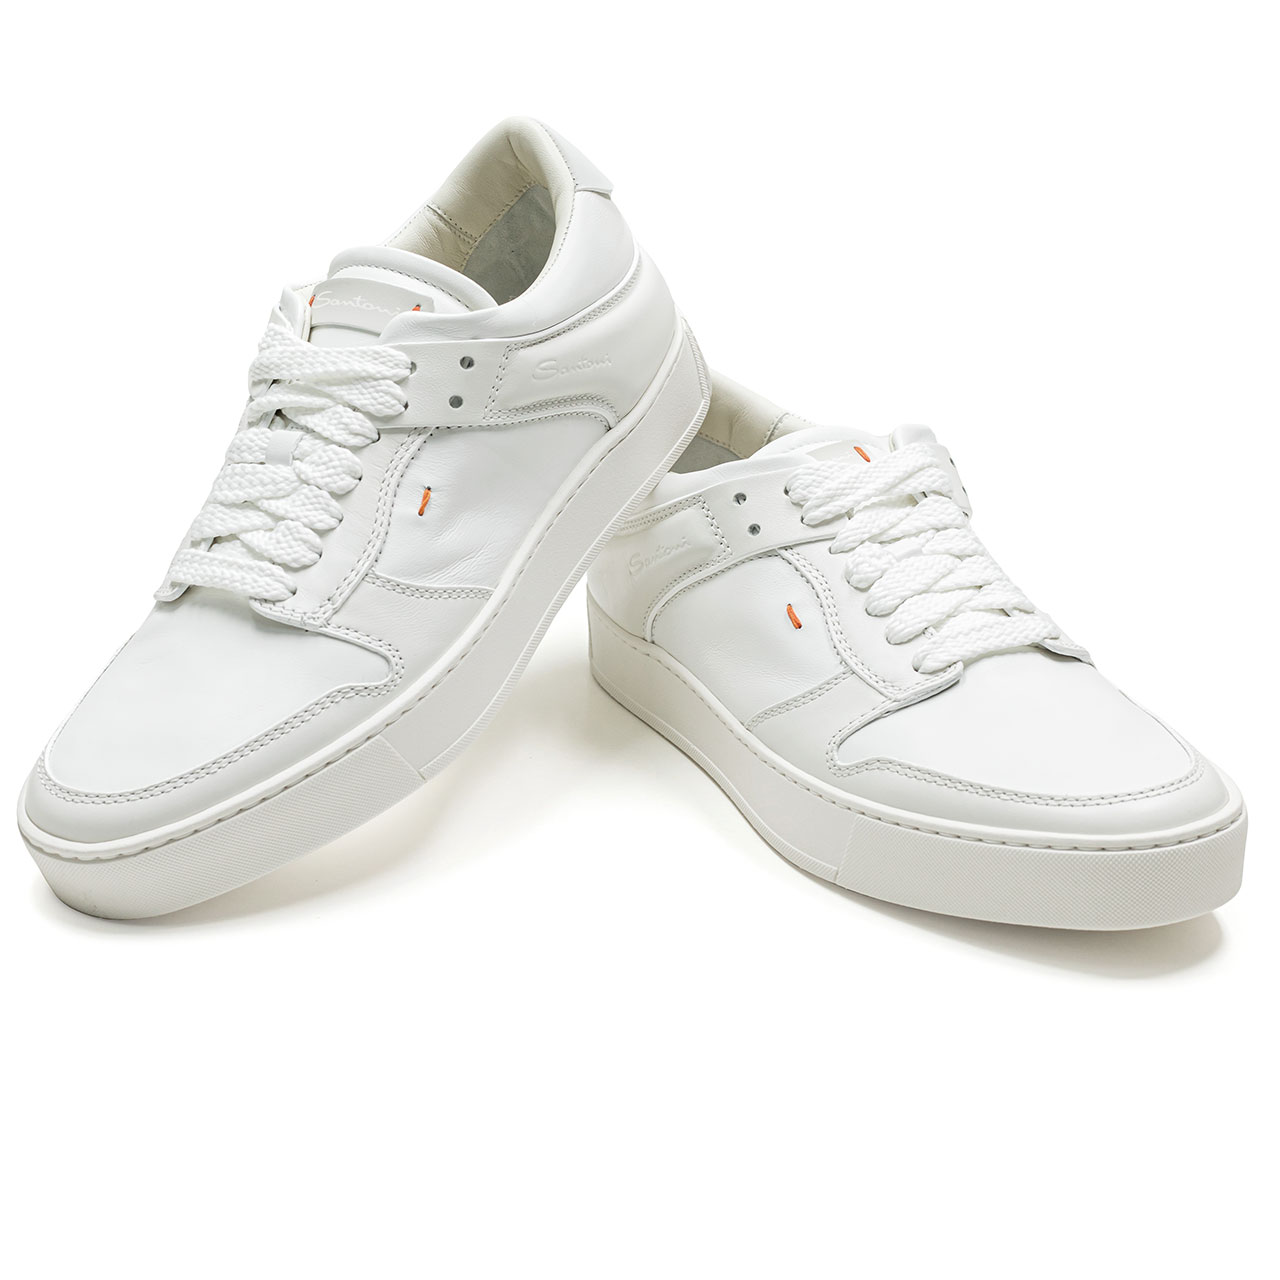 Santoni Sneaker in weiß aus Glattleder